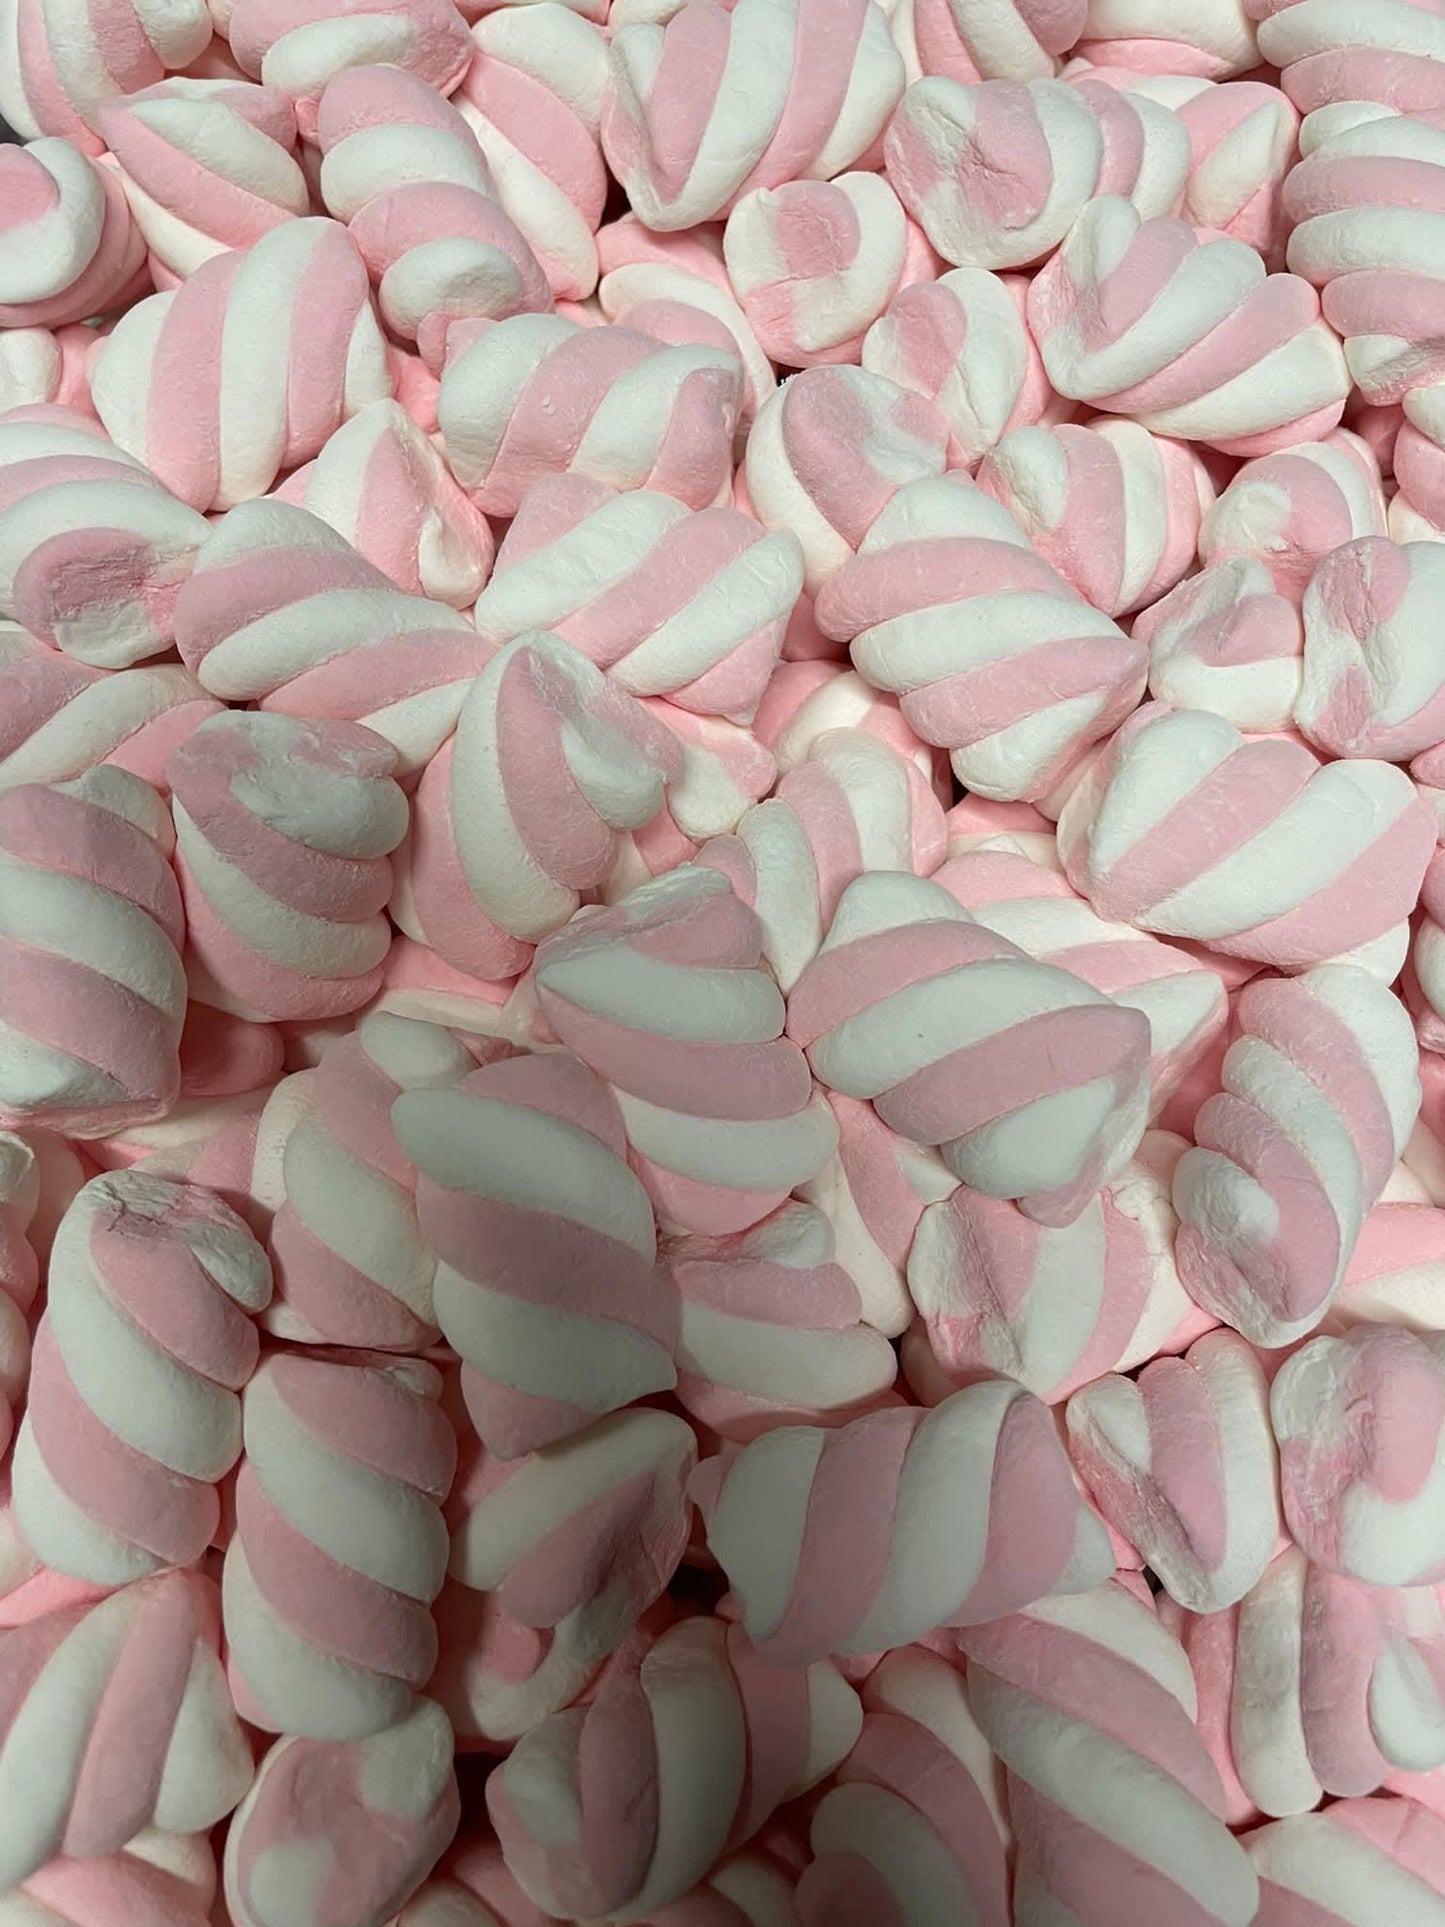 Pink marshmallows -100g